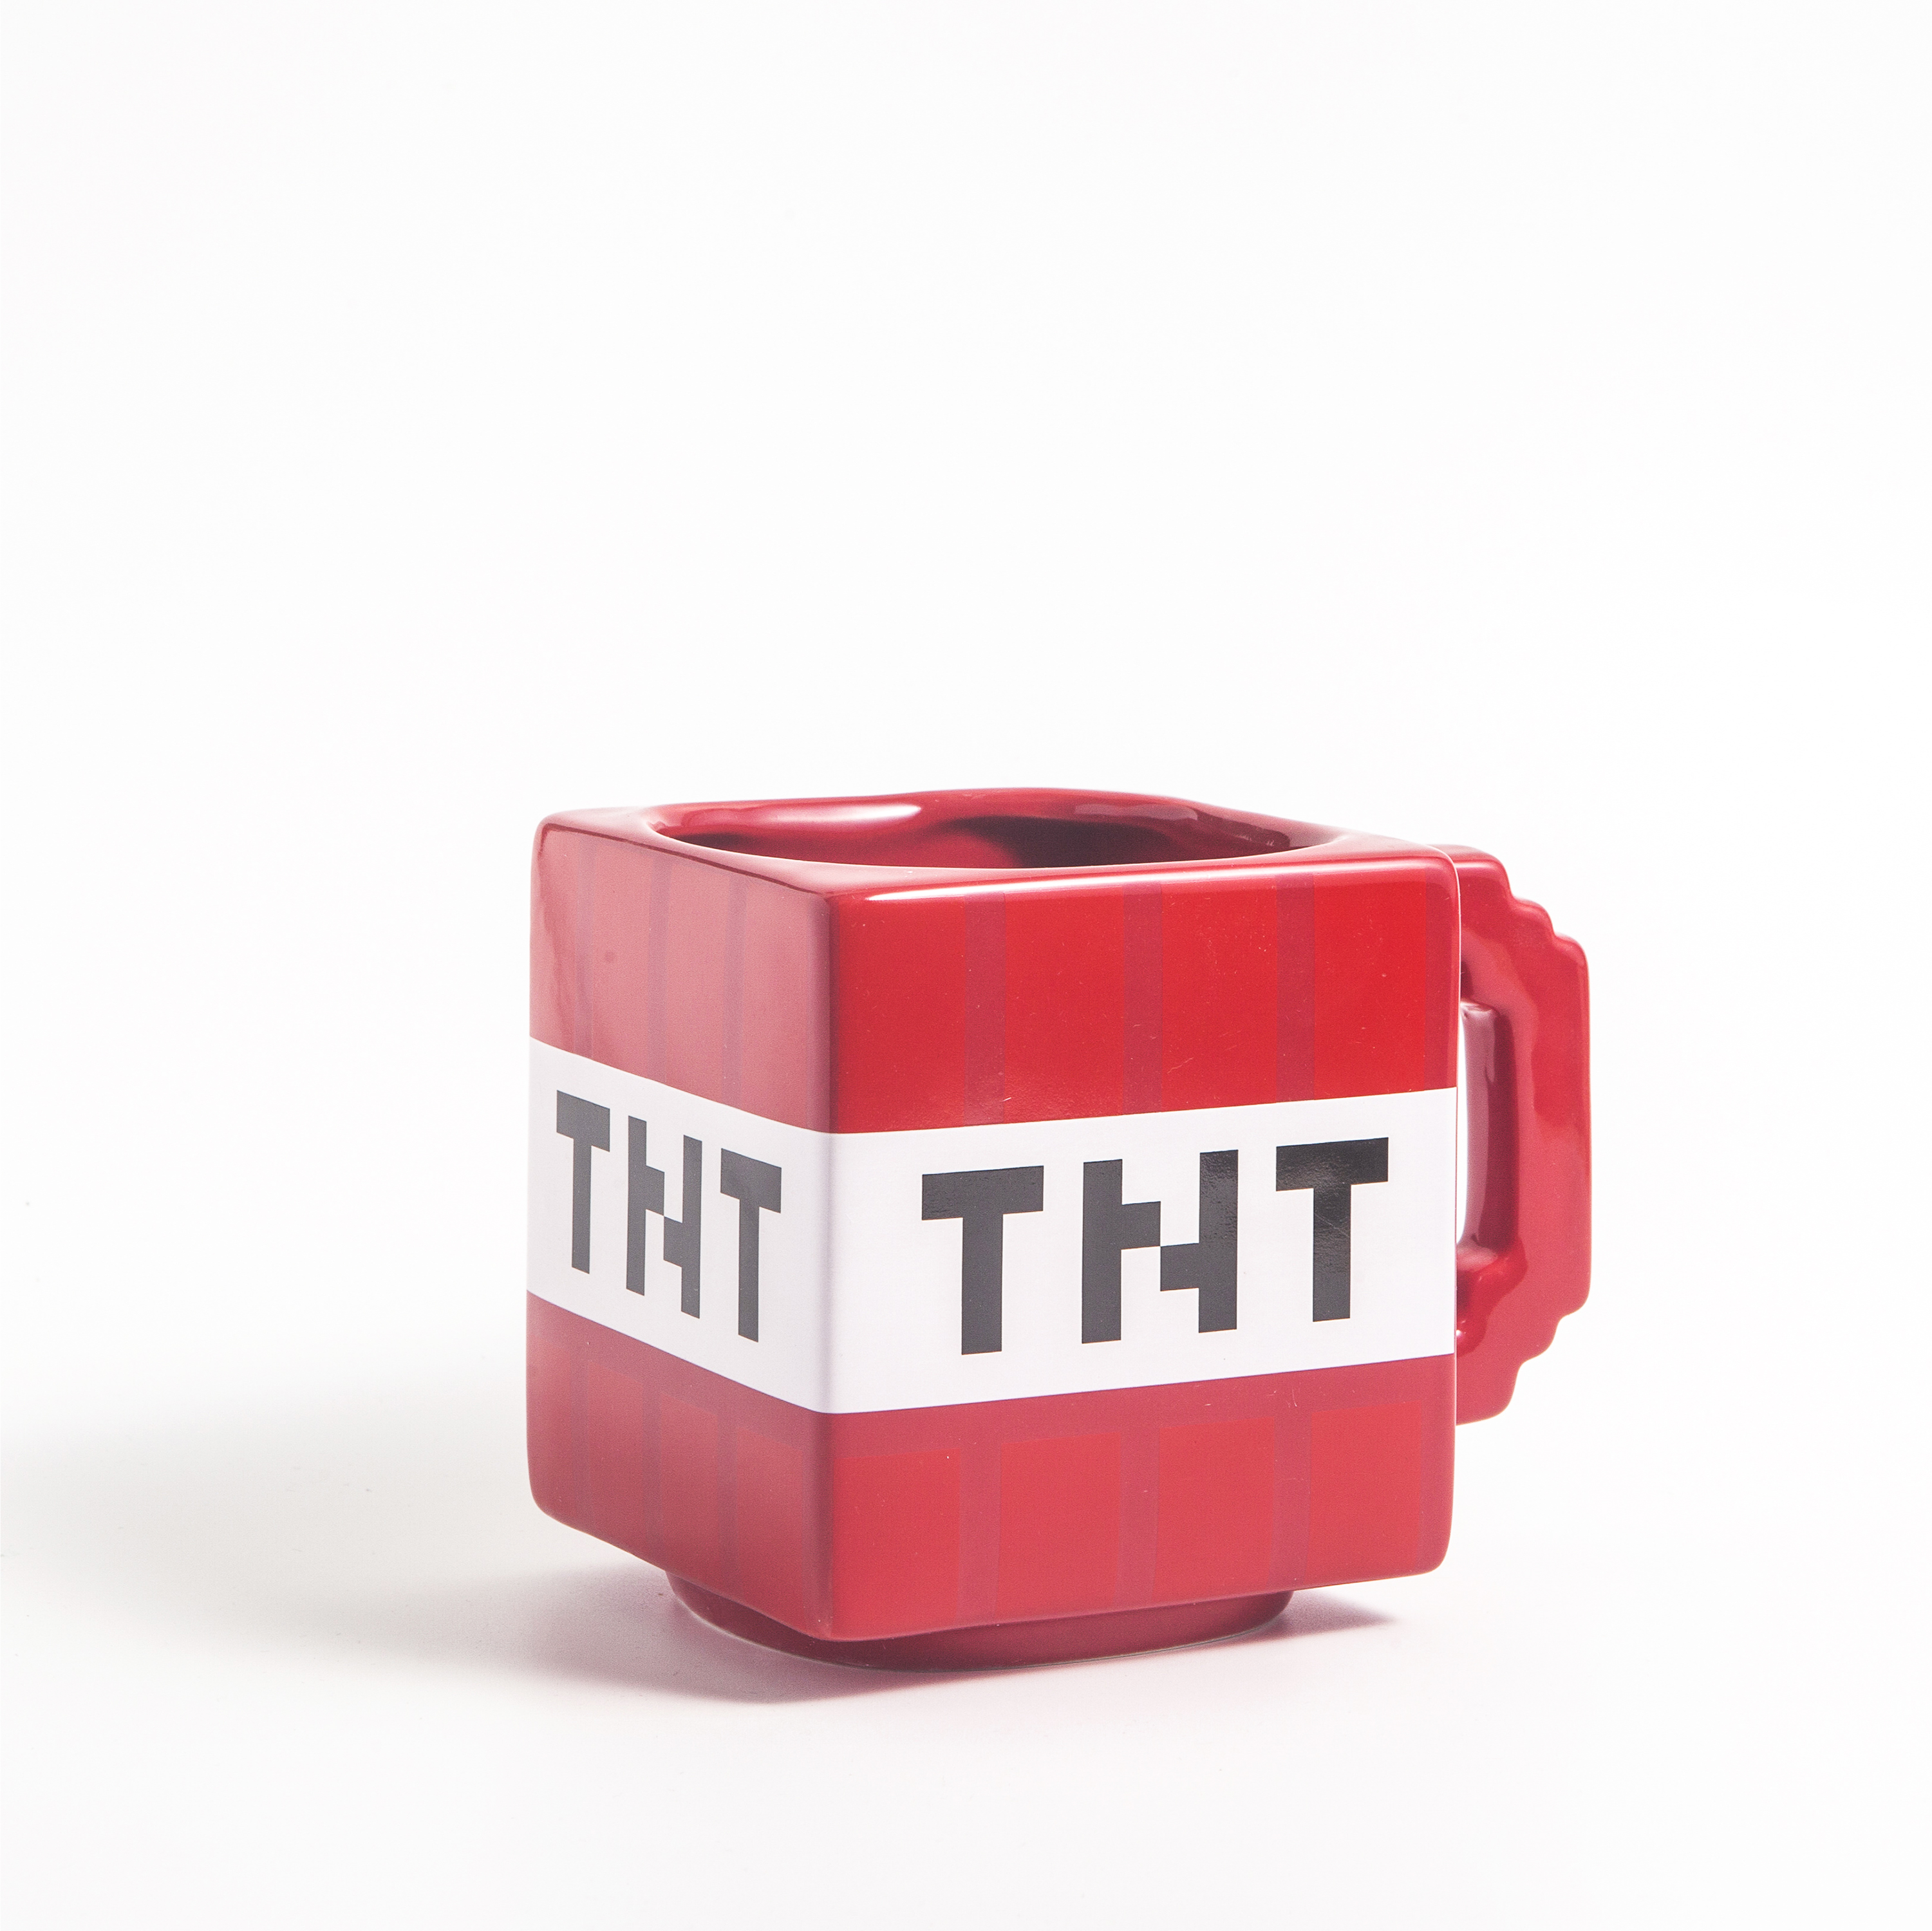 Minecraft Ceramic Coffee Mug, TNT, Skeletons and Creeper, 3-piece set slideshow image 2